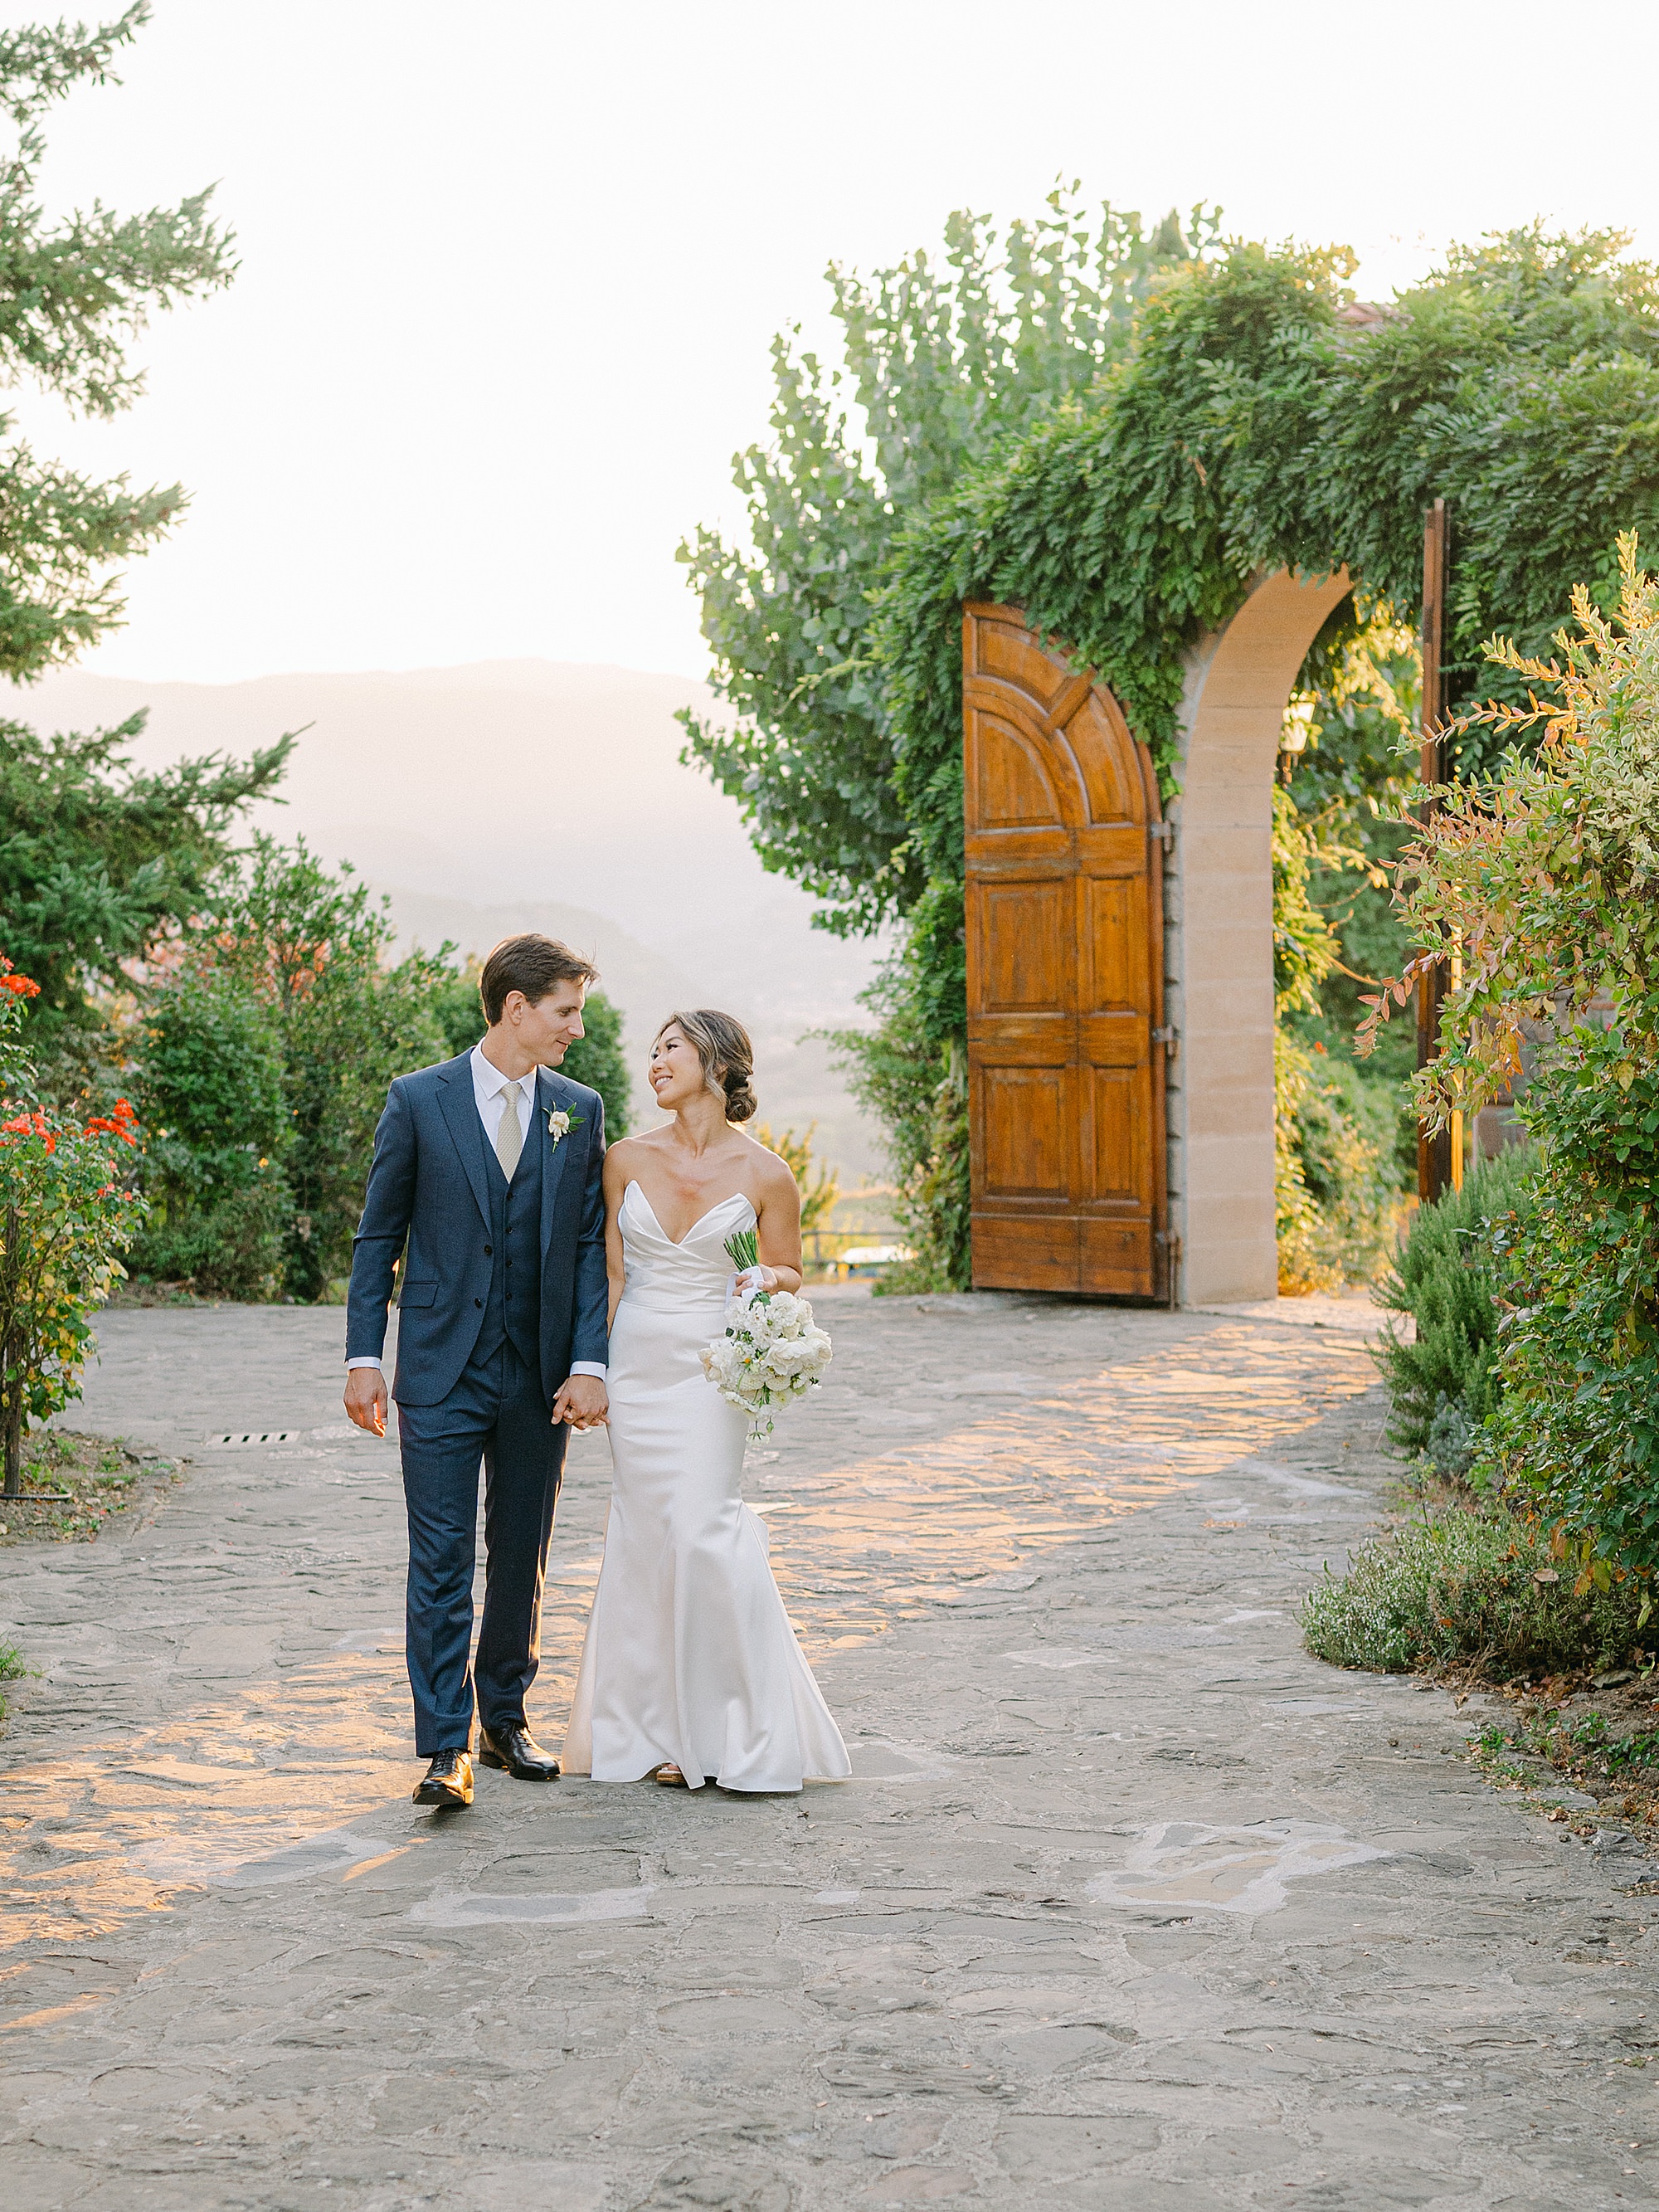 Destination Wedding Photographer Tuscany